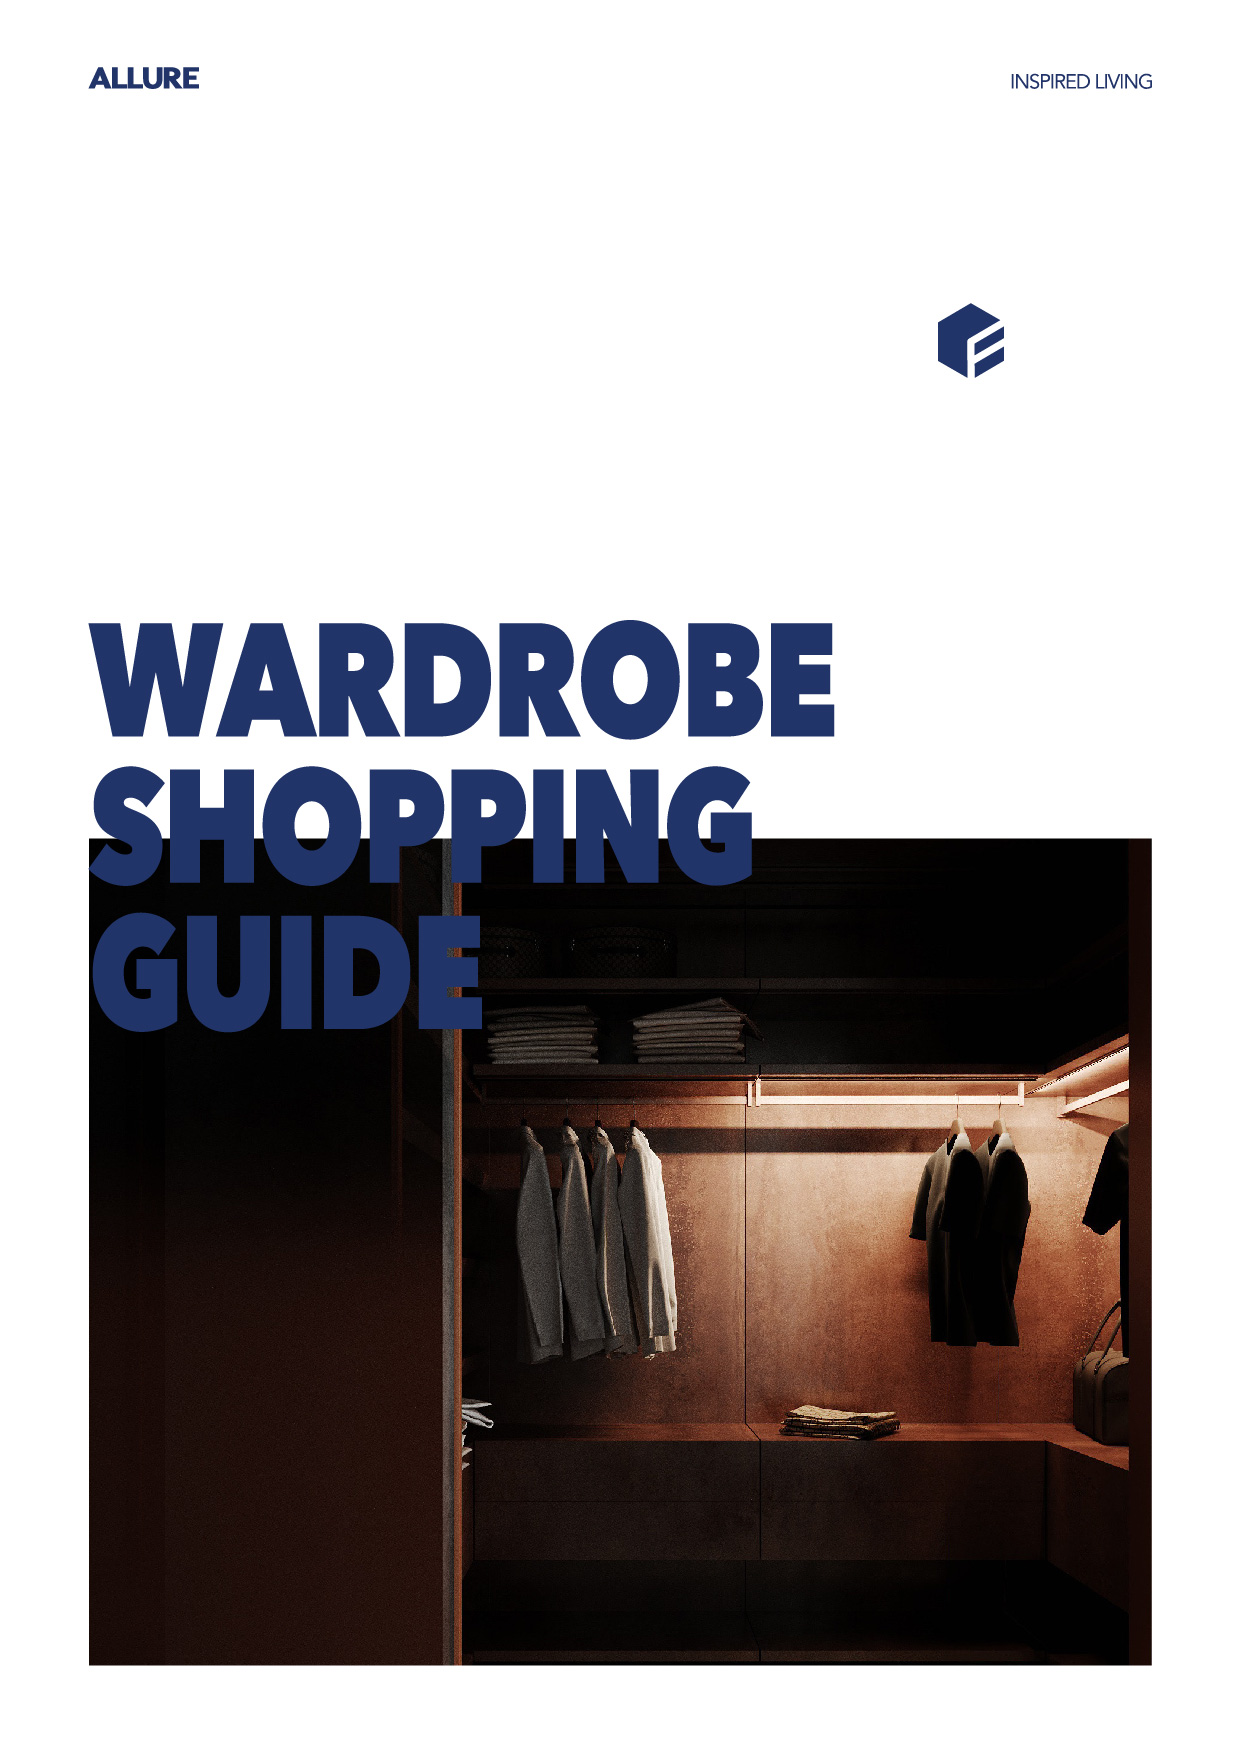 ALLURE Wardrobe Shopping Guide